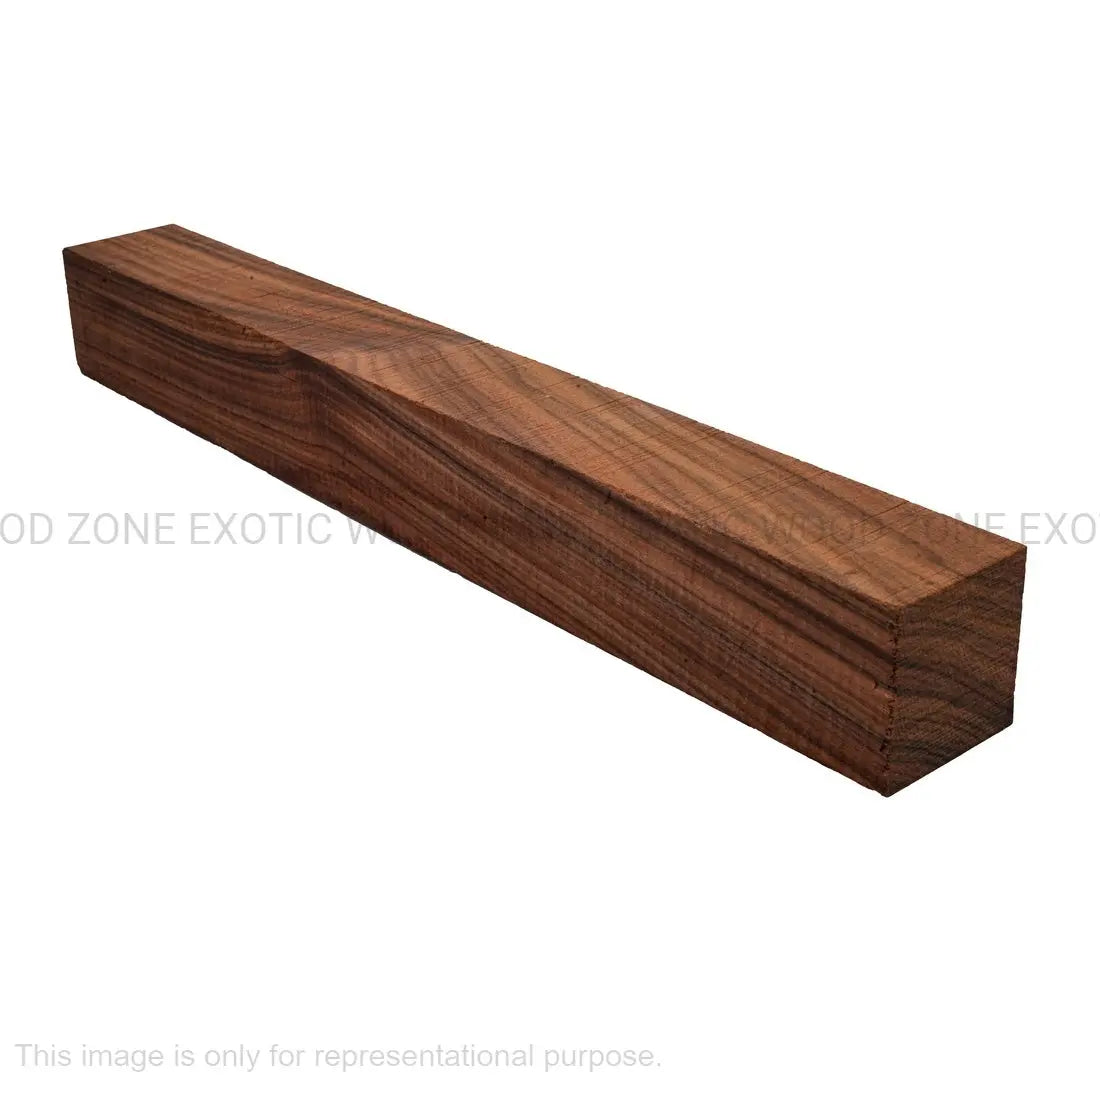 Santos Rosewood Turning Blanks - Exotic Wood Zone - Buy online Across USA 